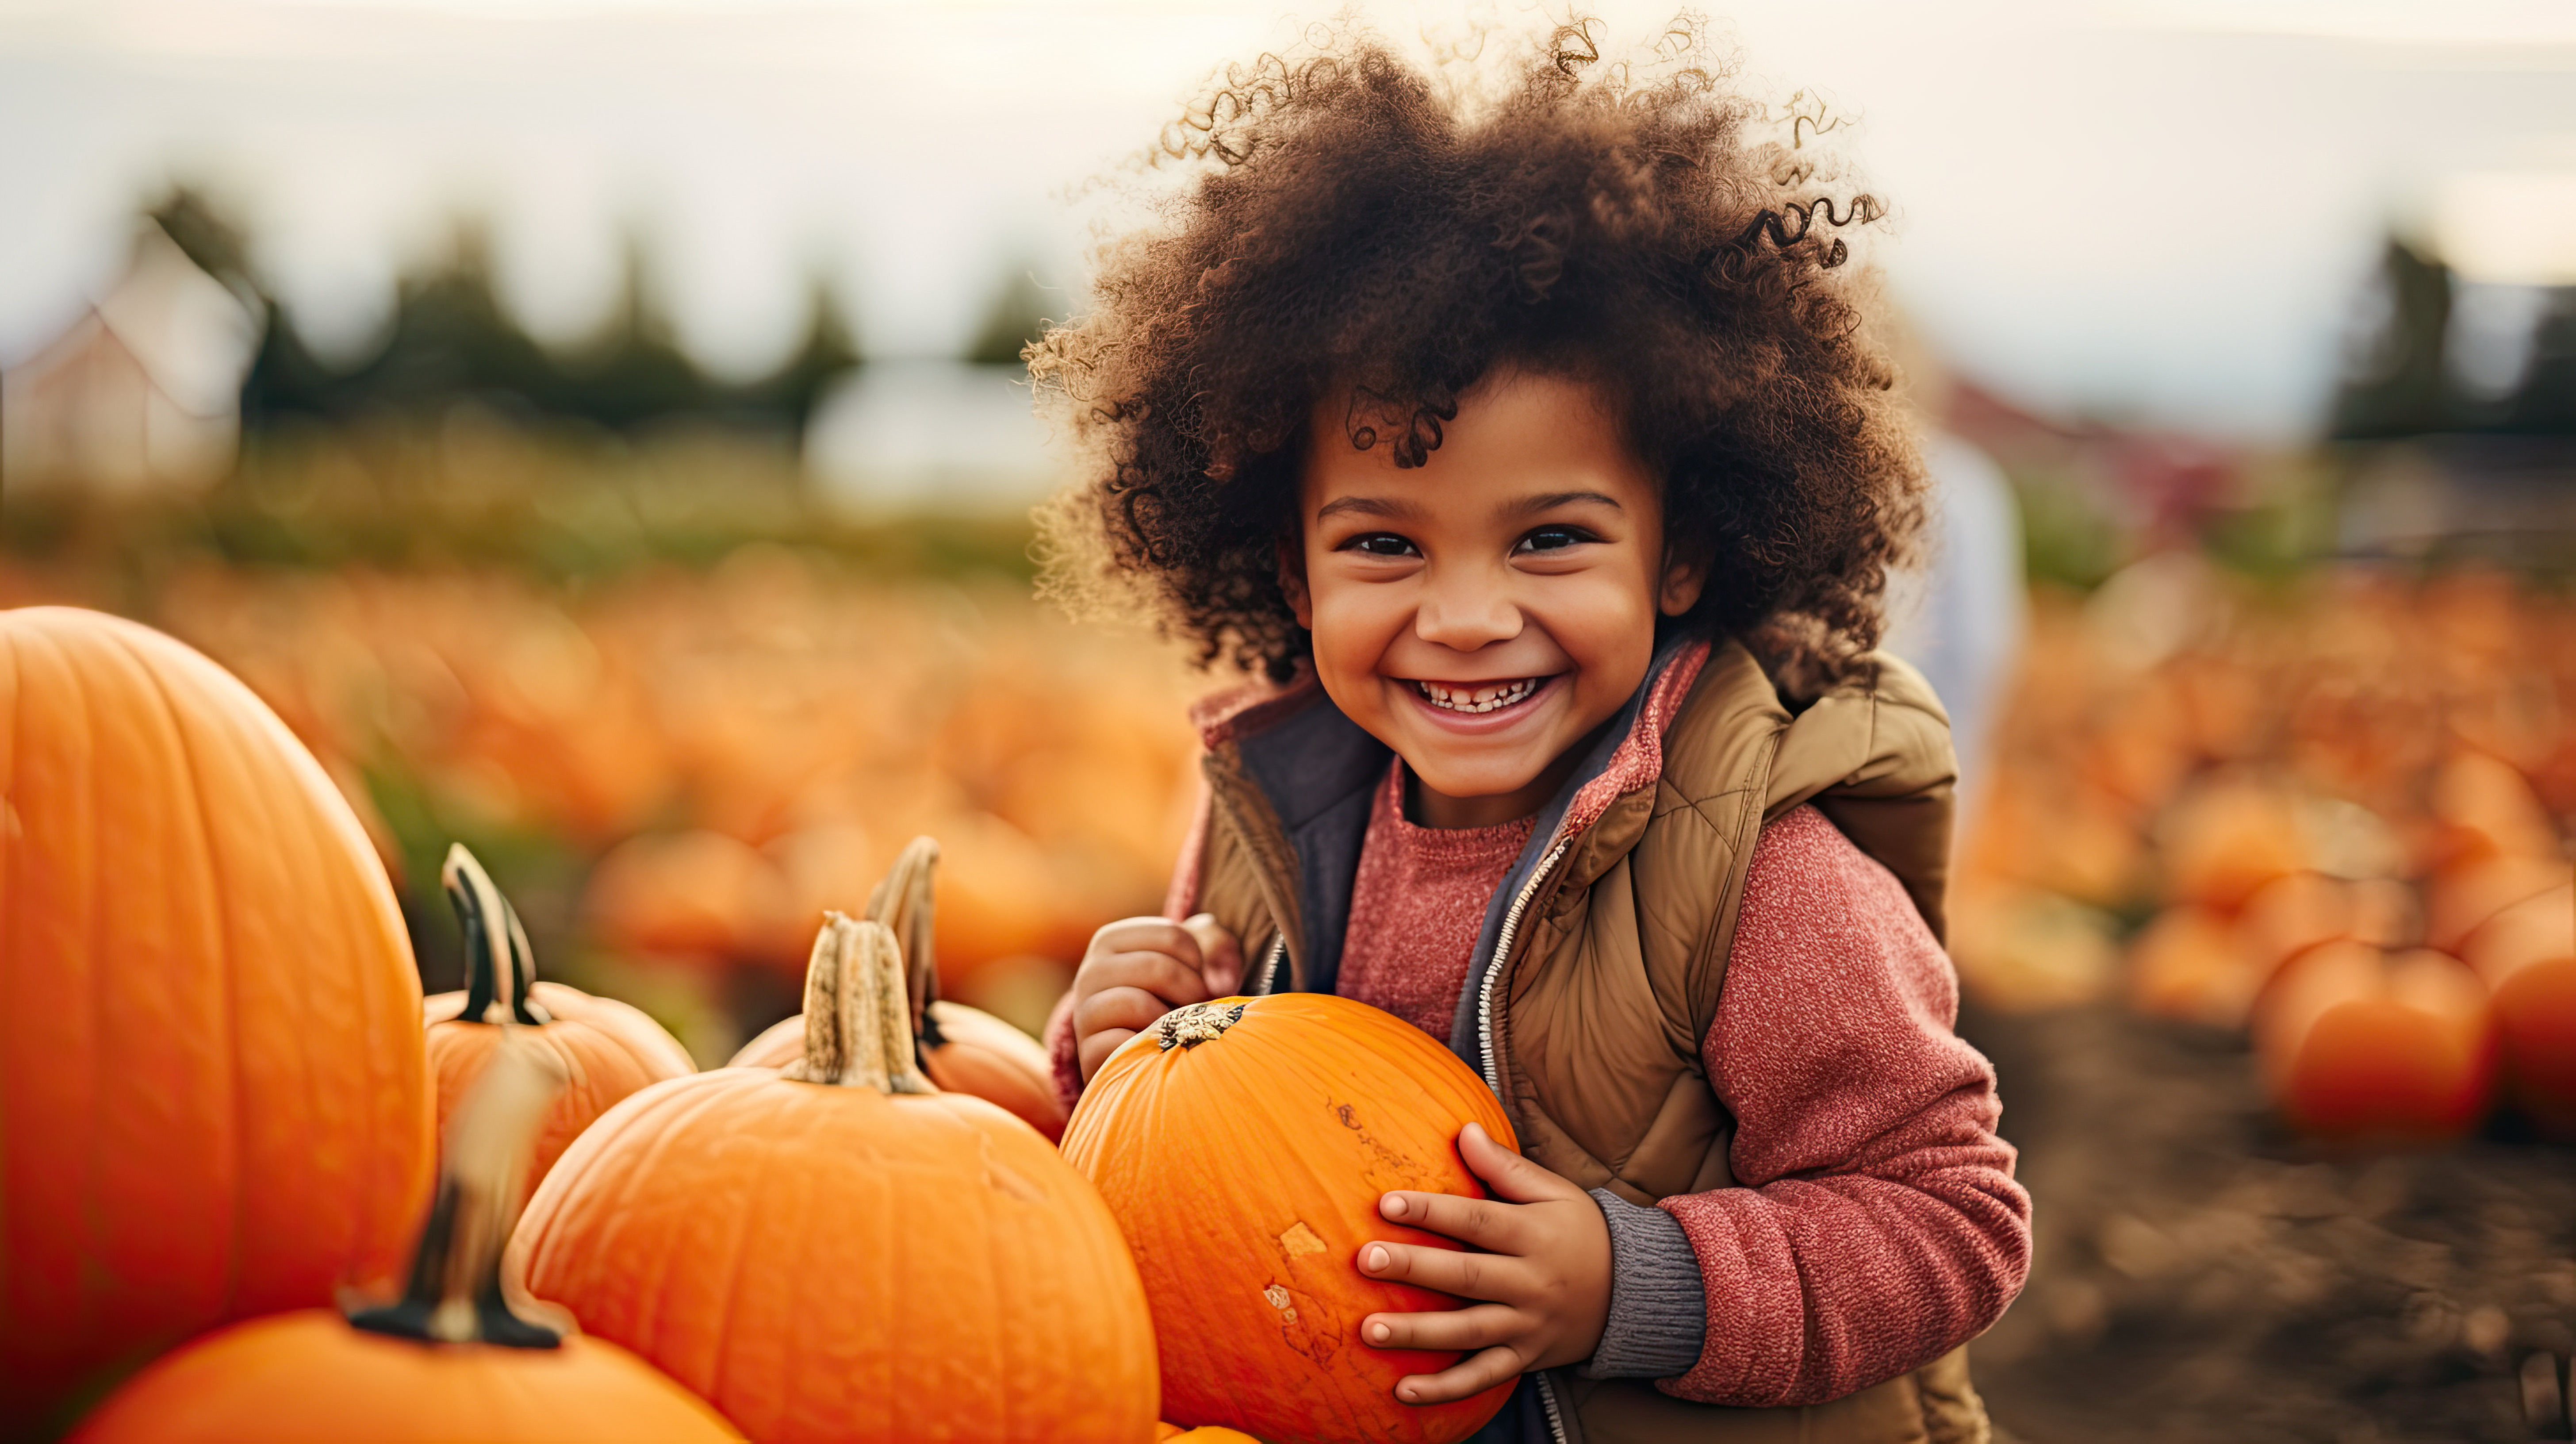 Little kid with pumpkins